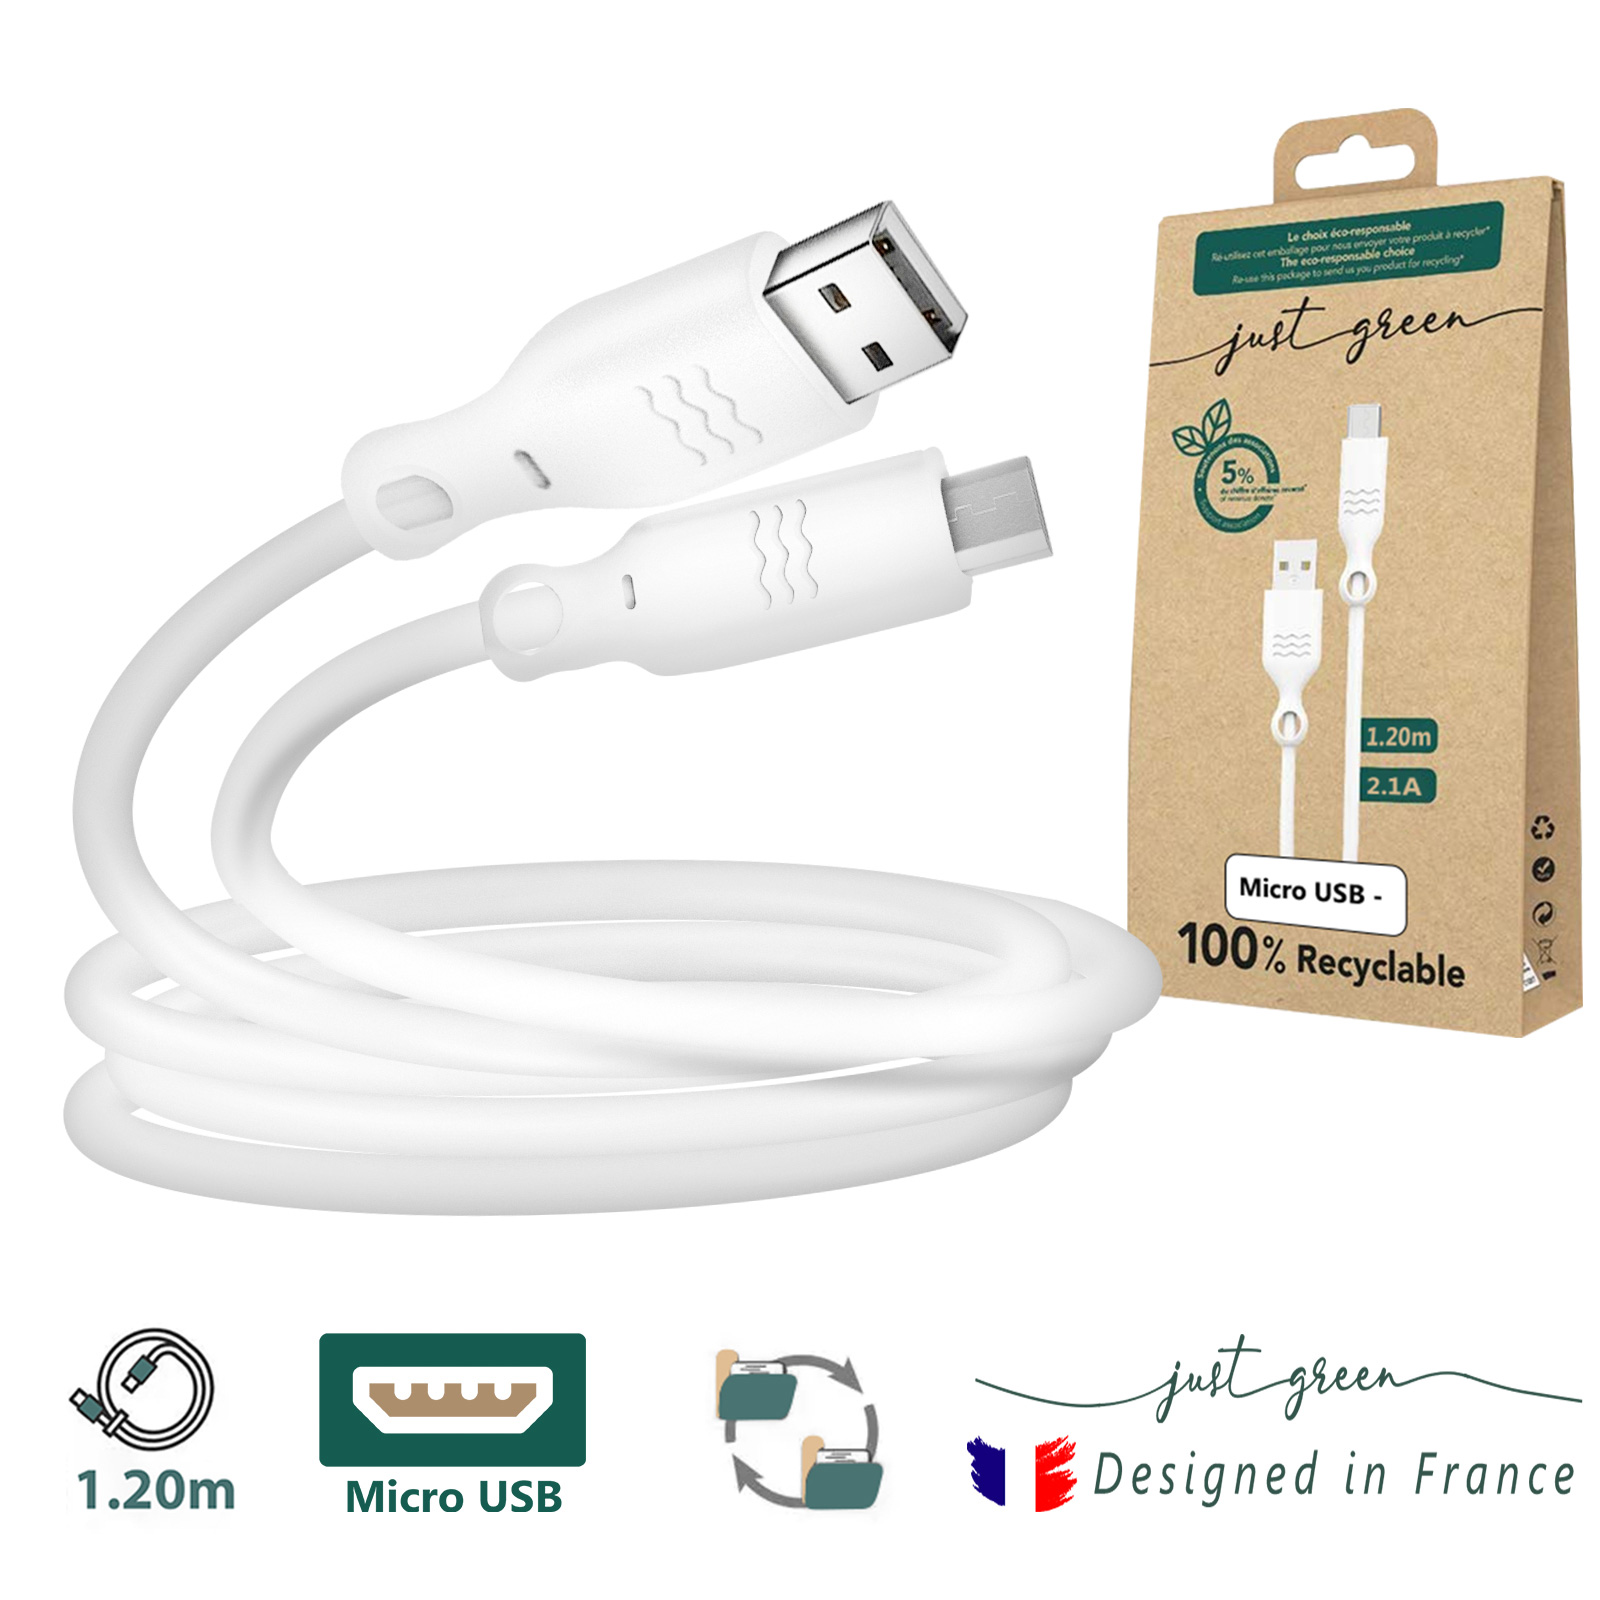 Câble Micro-USB Recyclable Ecologique Just Green Intensité 2.1a 2m Vert